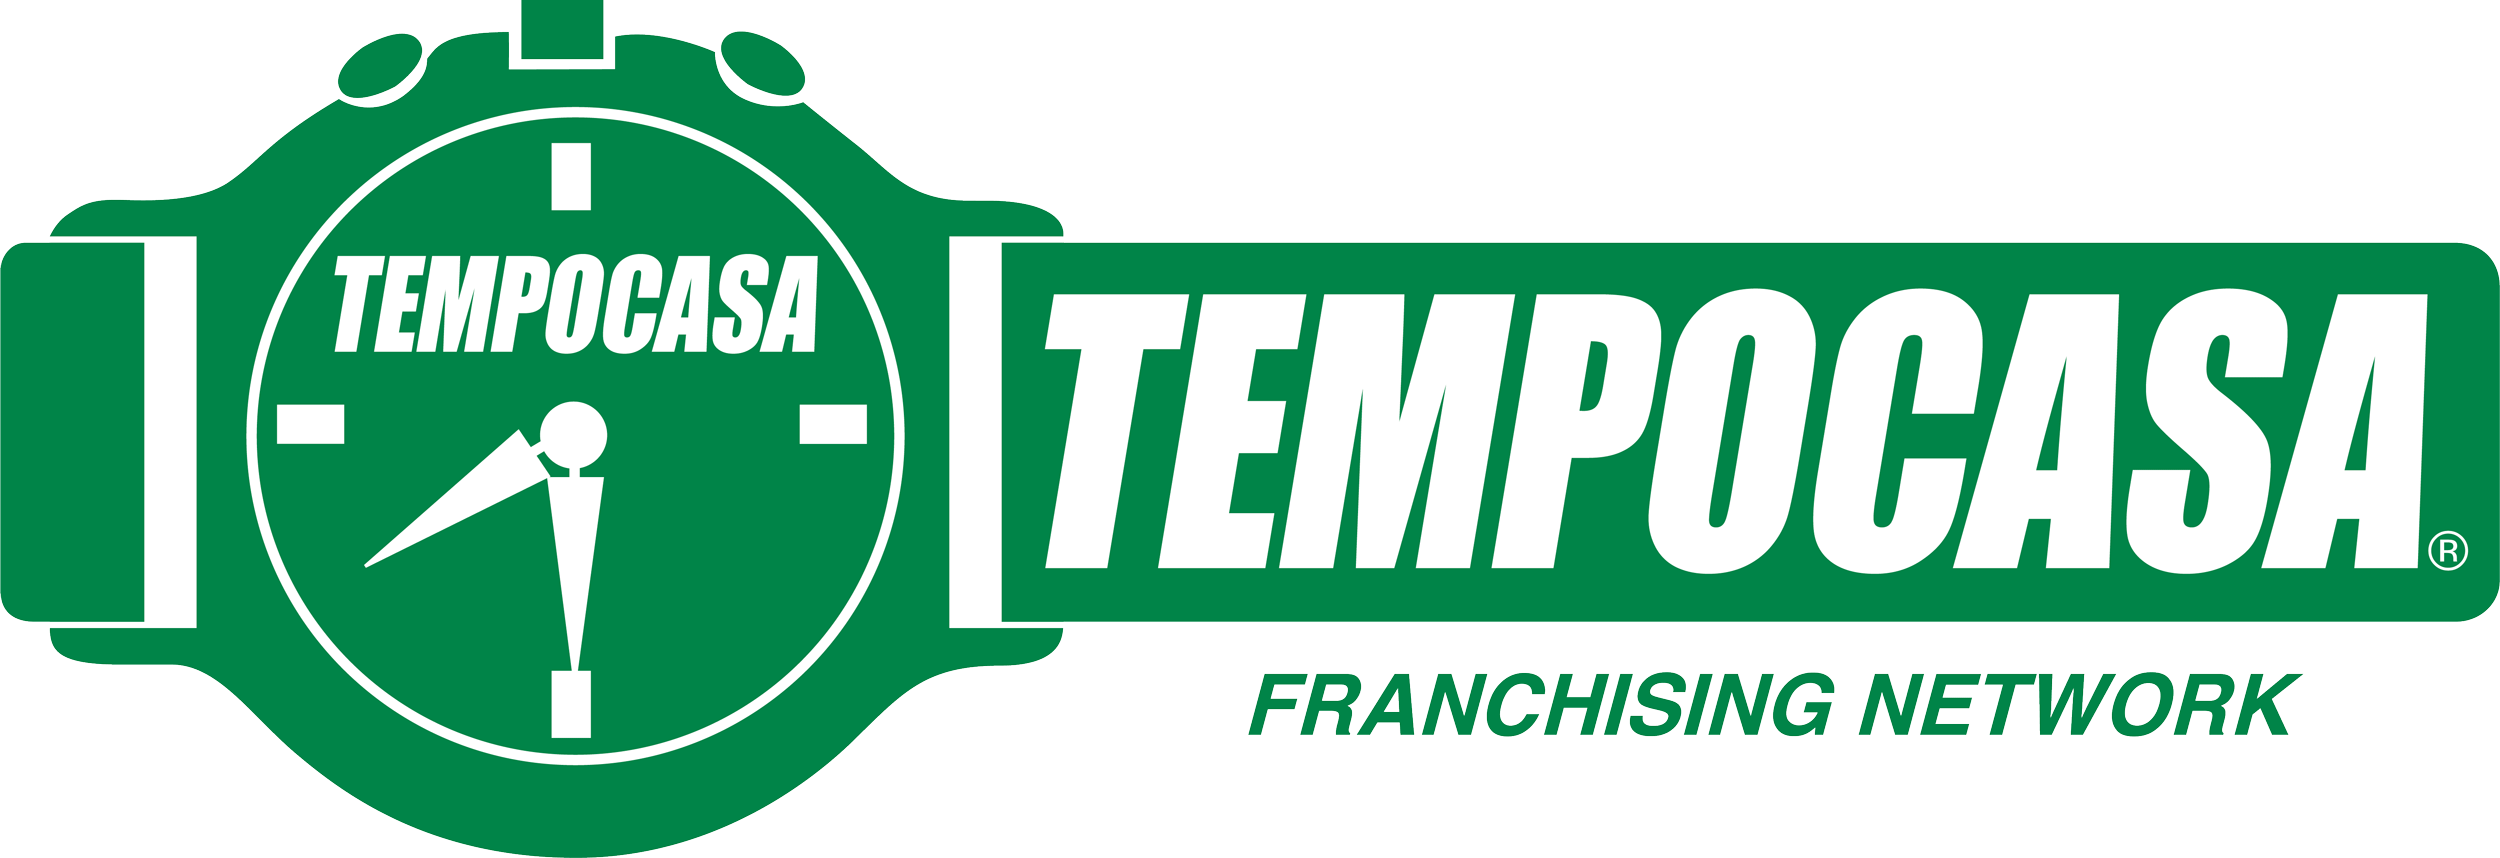 `franchise image TEMPOCASA`